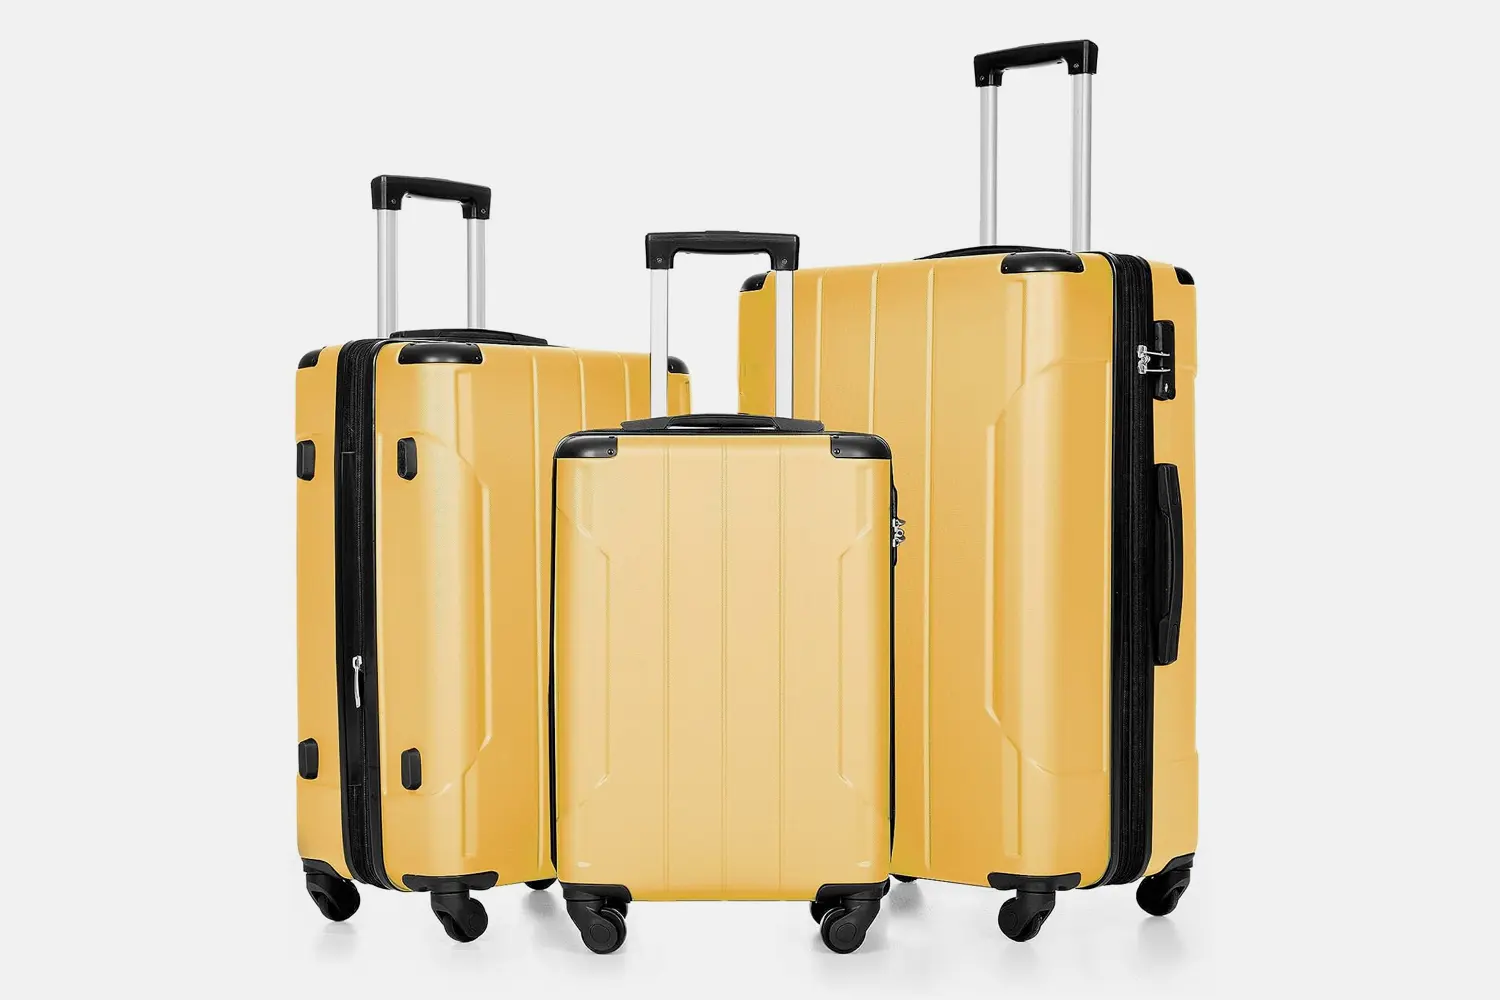 Merax Travelhouse Spinner Luggage Set - 3 Piece